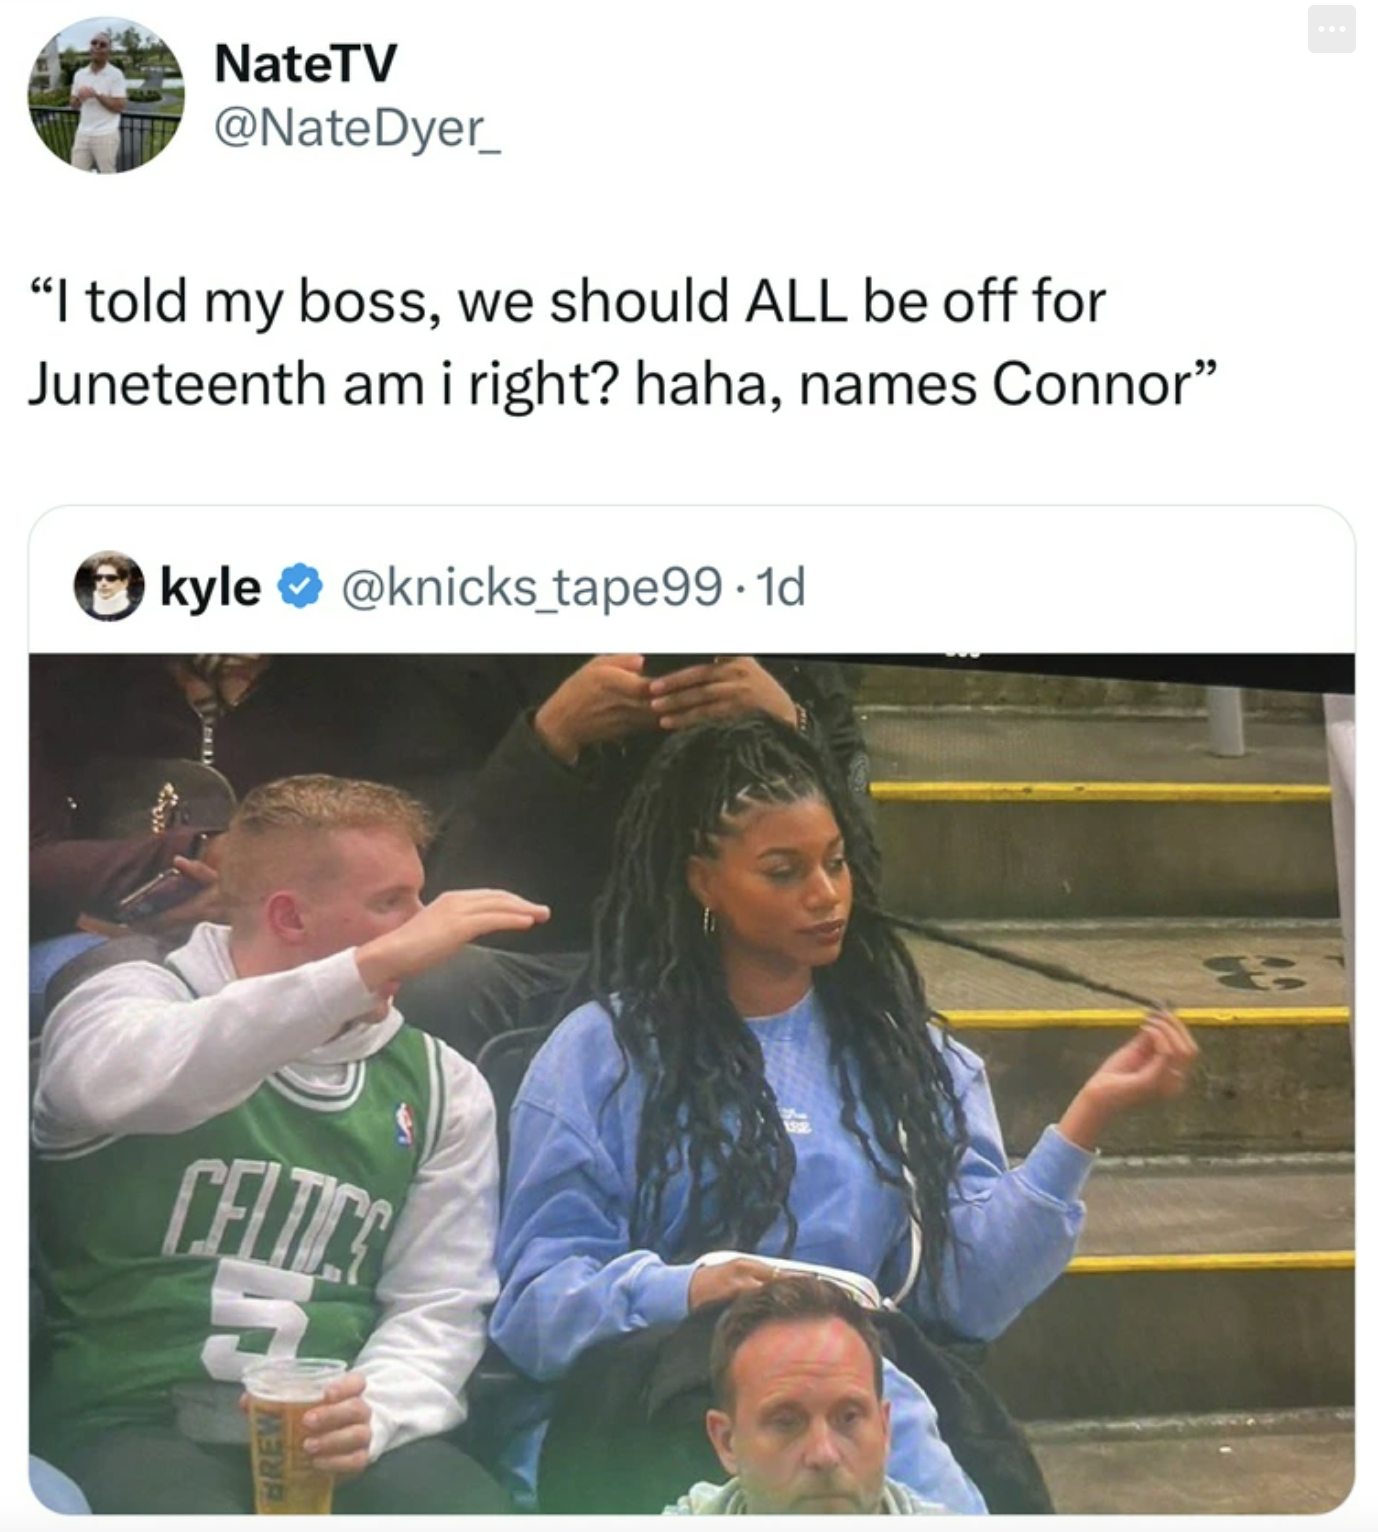 taylor rooks celtics game - NateTV "I told my boss, we should All be off for Juneteenth am i right? haha, names Connor" kyle .1d Celtics Wren